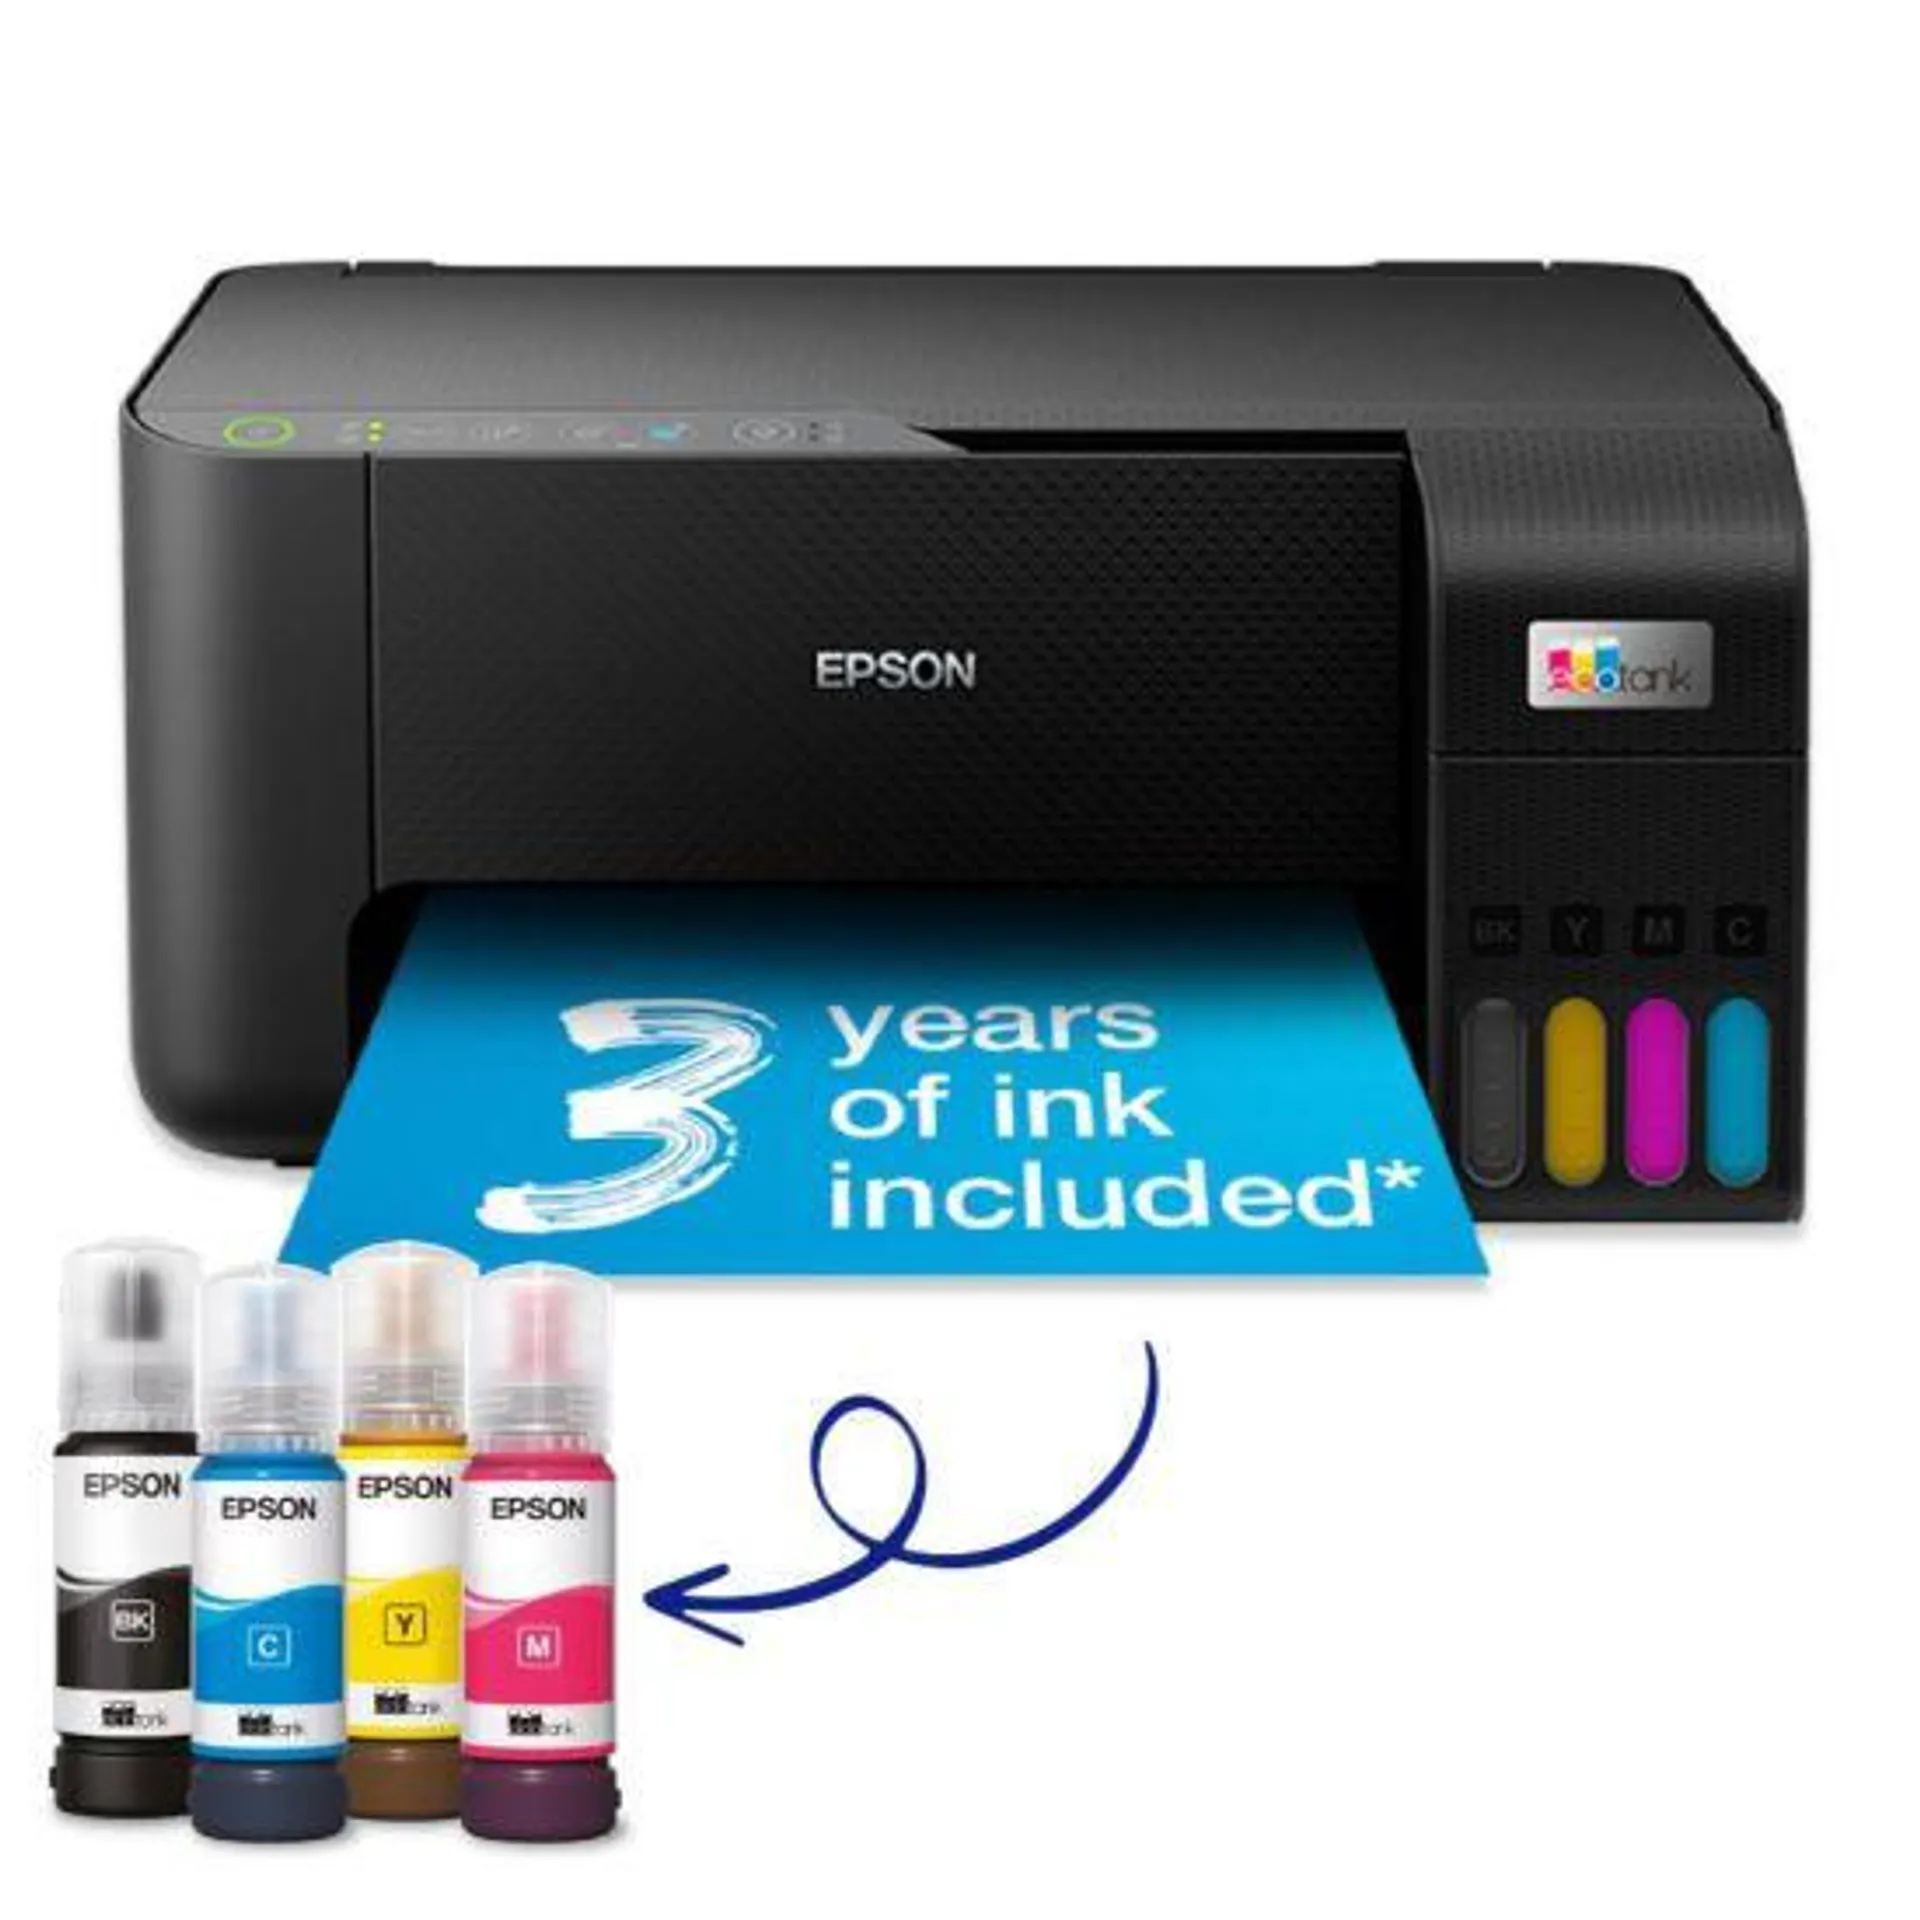 Epson EcoTank ET2810 Wireless Colour All in One Printer